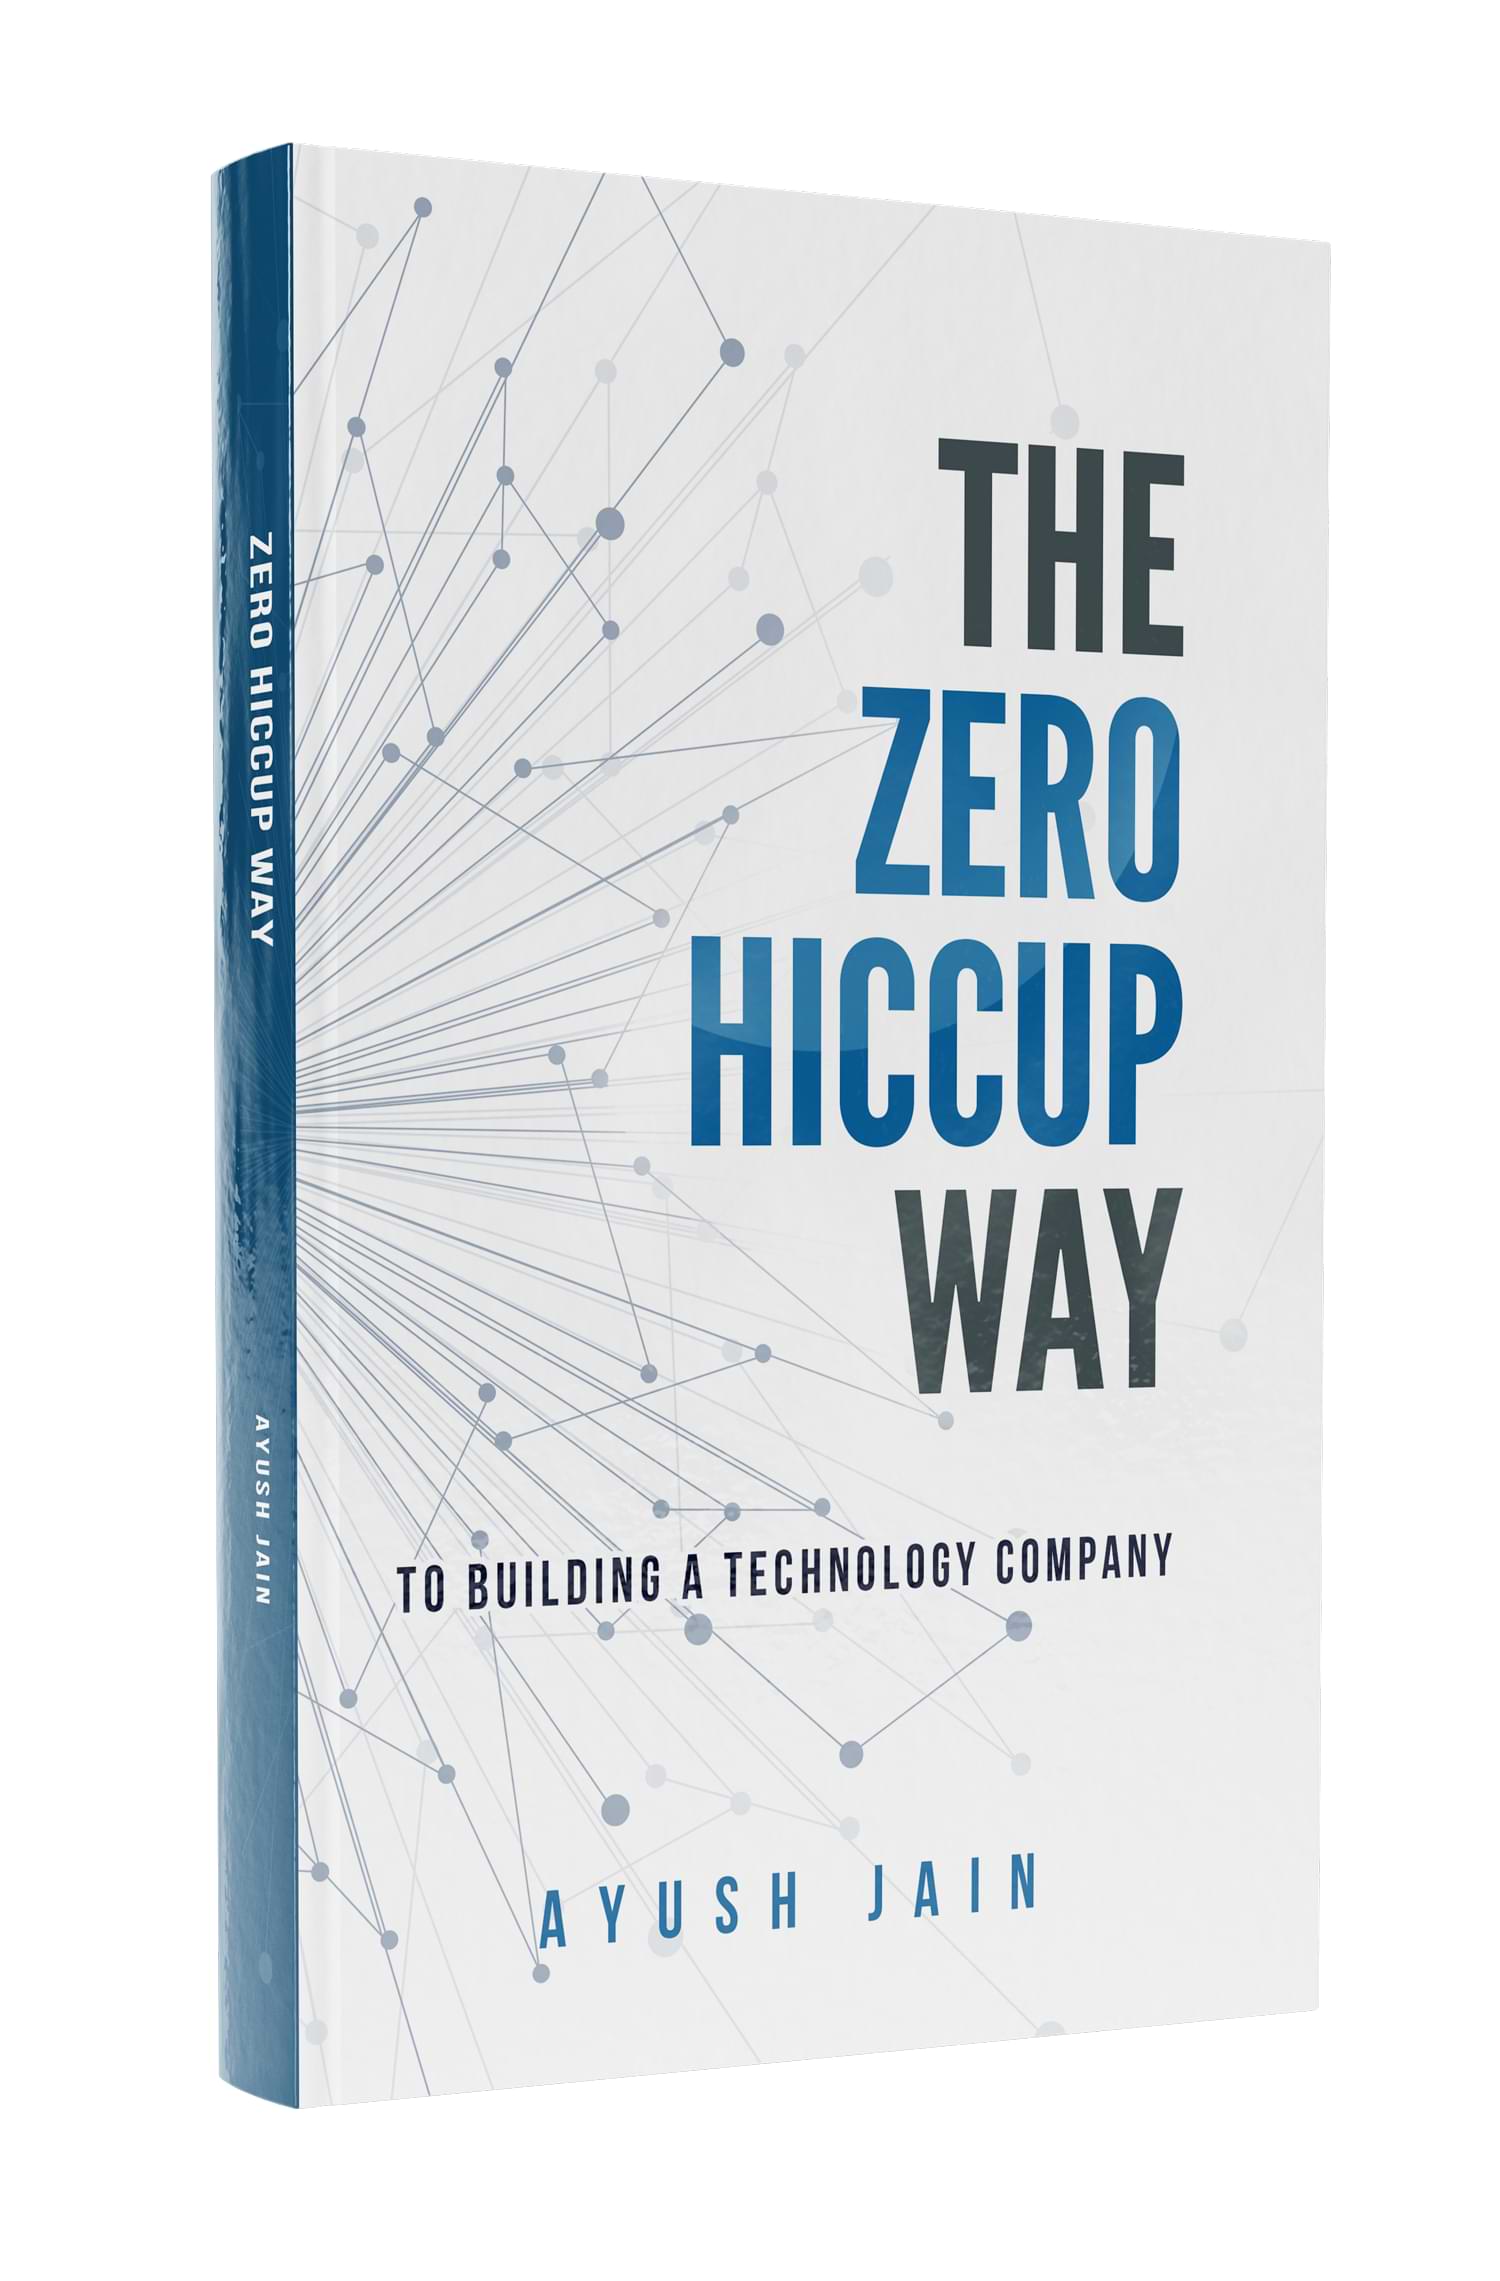 The Zero Hiccup Way